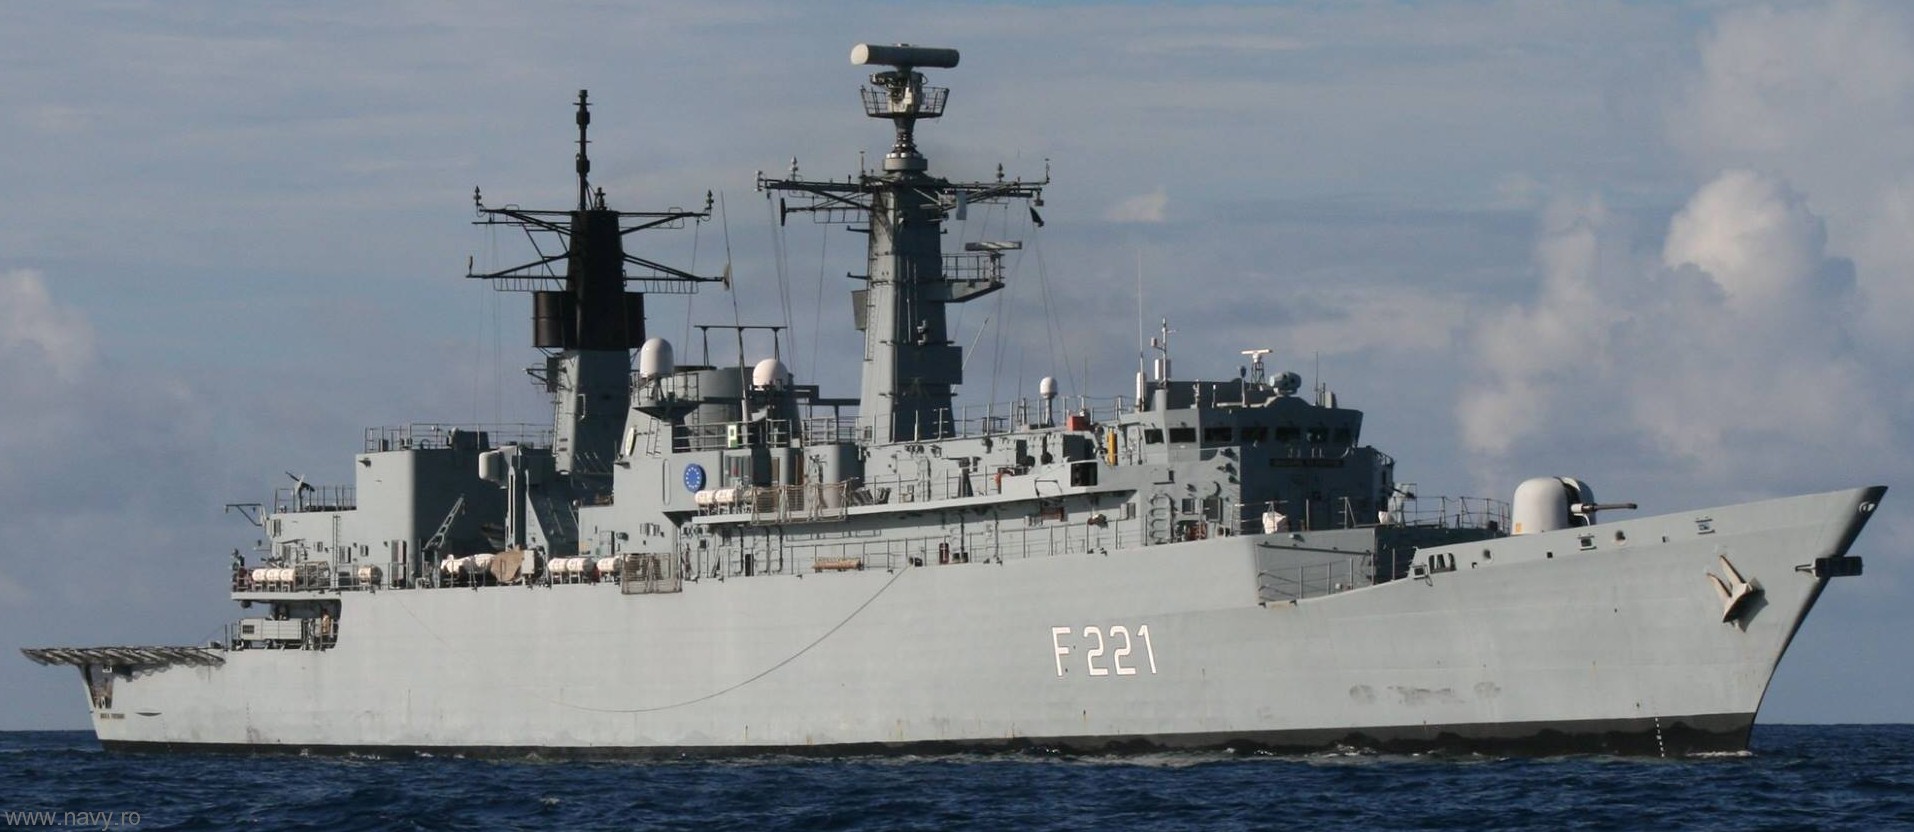 f-221 ros regele ferdinand frigate romanian navy type 22 broadsword class 75